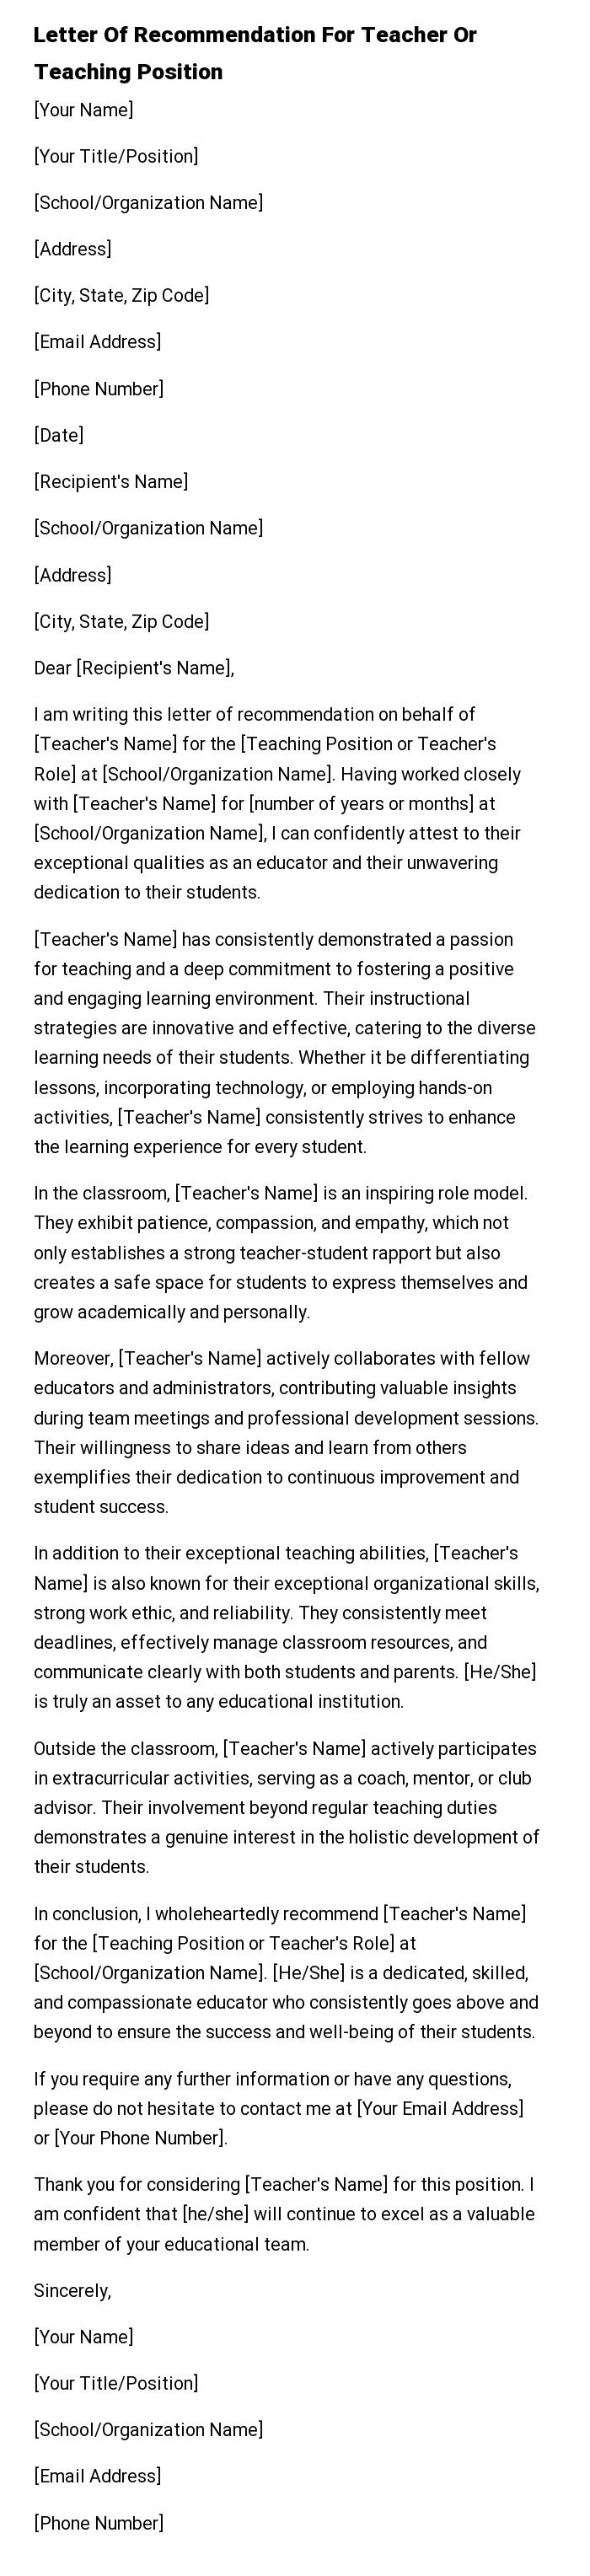 Letter Of Recommendation For Teacher Or Teaching Position